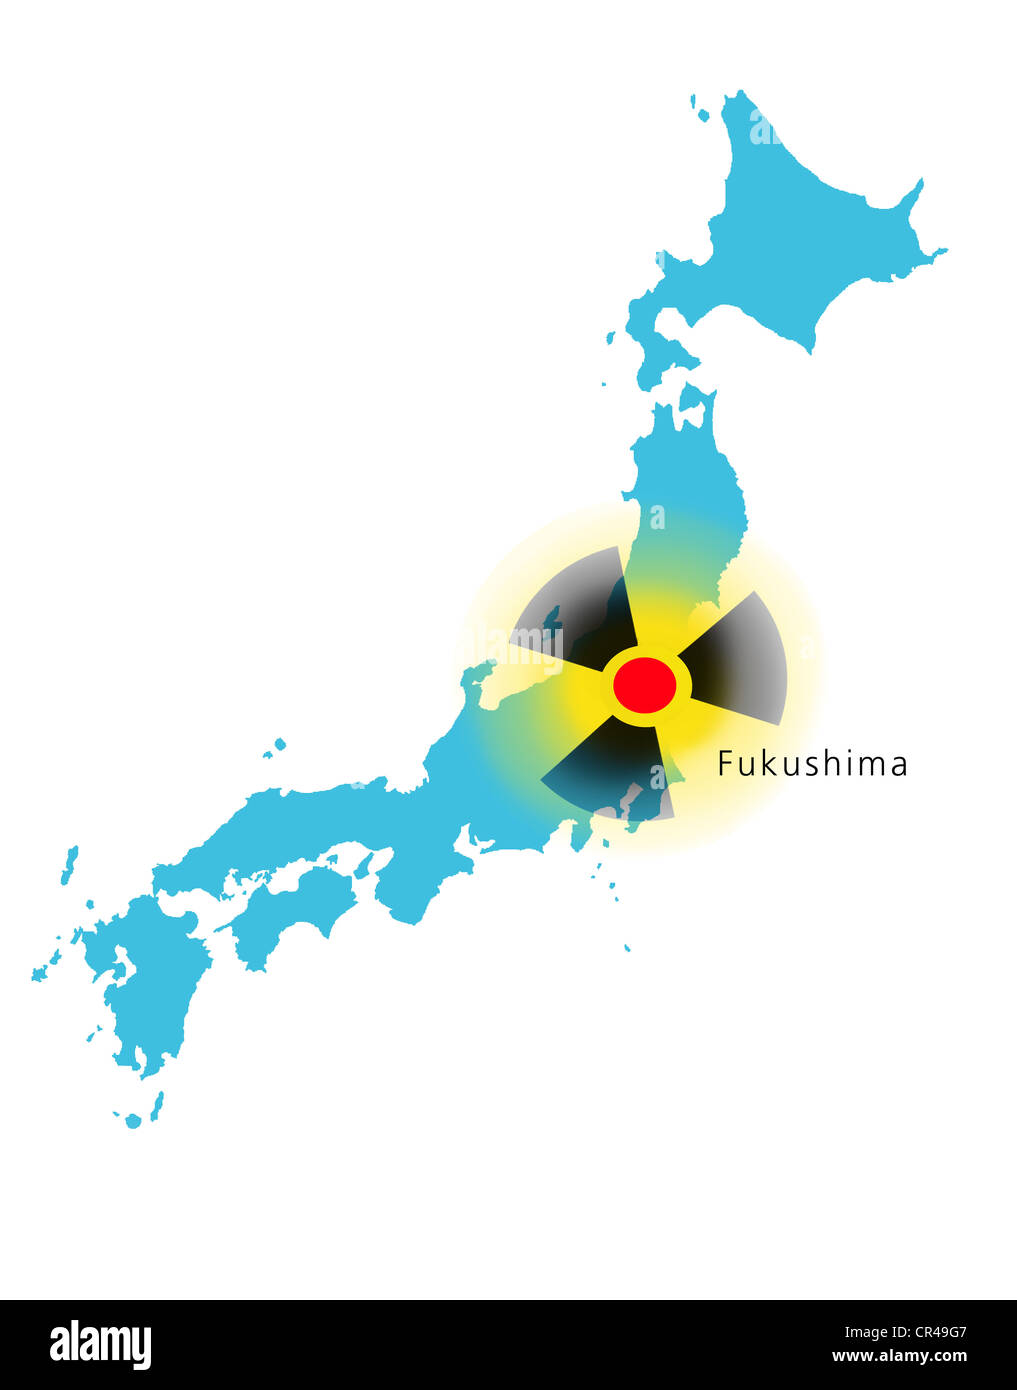 Map of Japan with radioactivity symbol over the Fukushima region, Asia Stock Photo